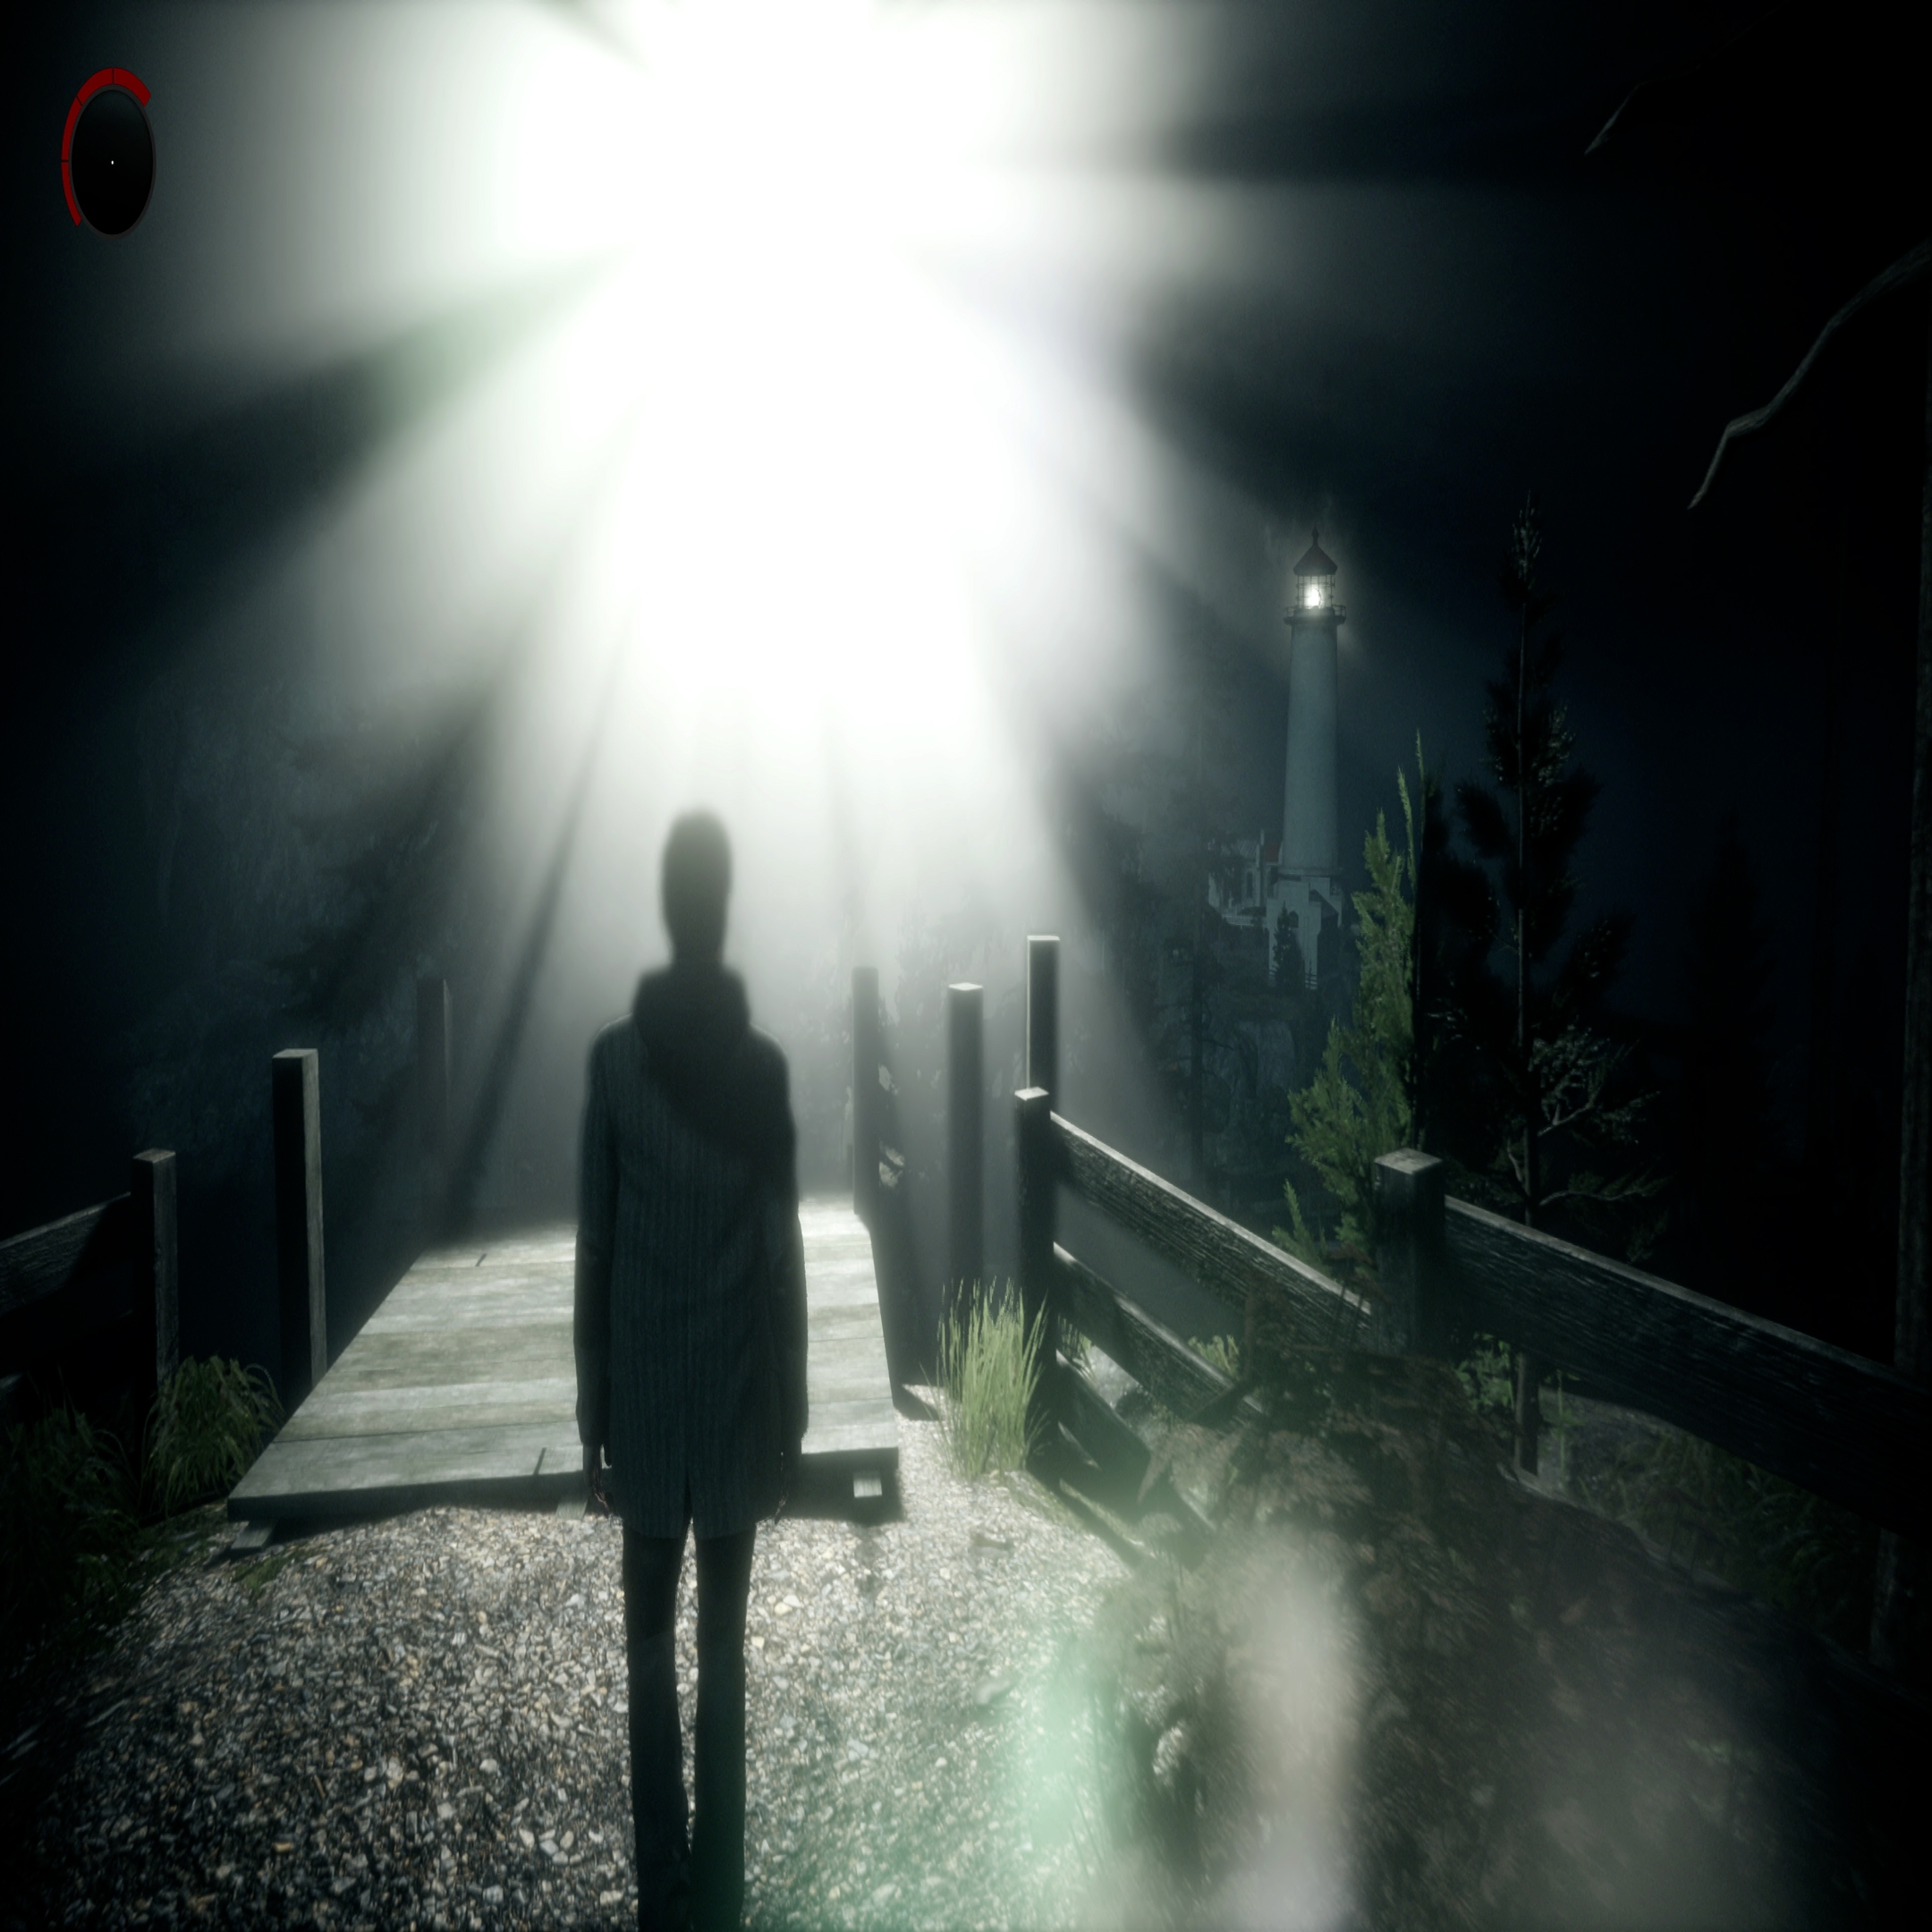 Rakuten Taiwan lists Alan Wake Remastered for PS5, Xbox Series